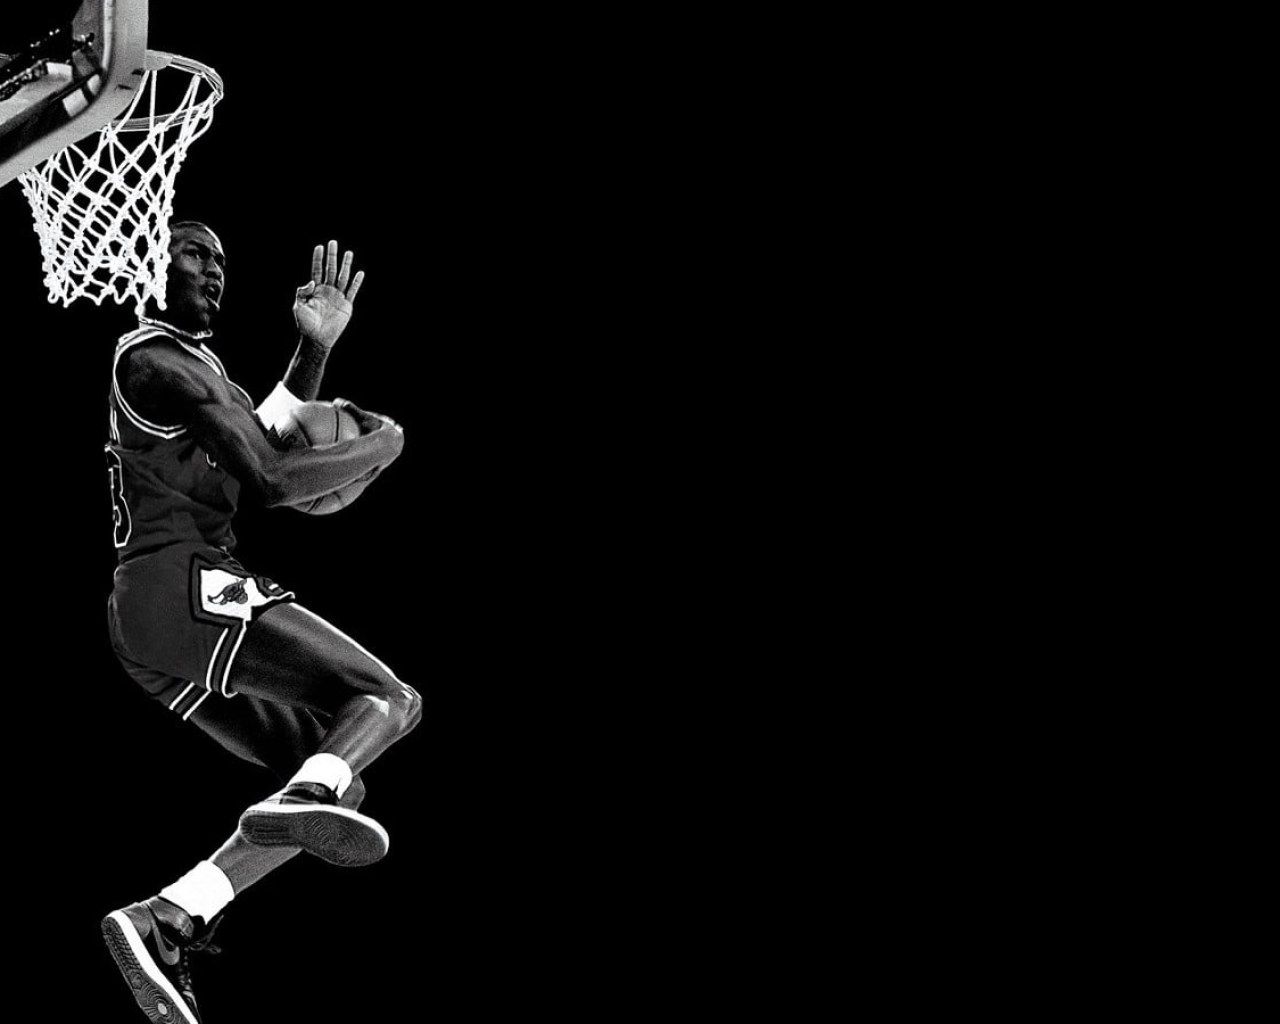 Michael Jordan Wallpaper, NBA .wallpaperforu.com